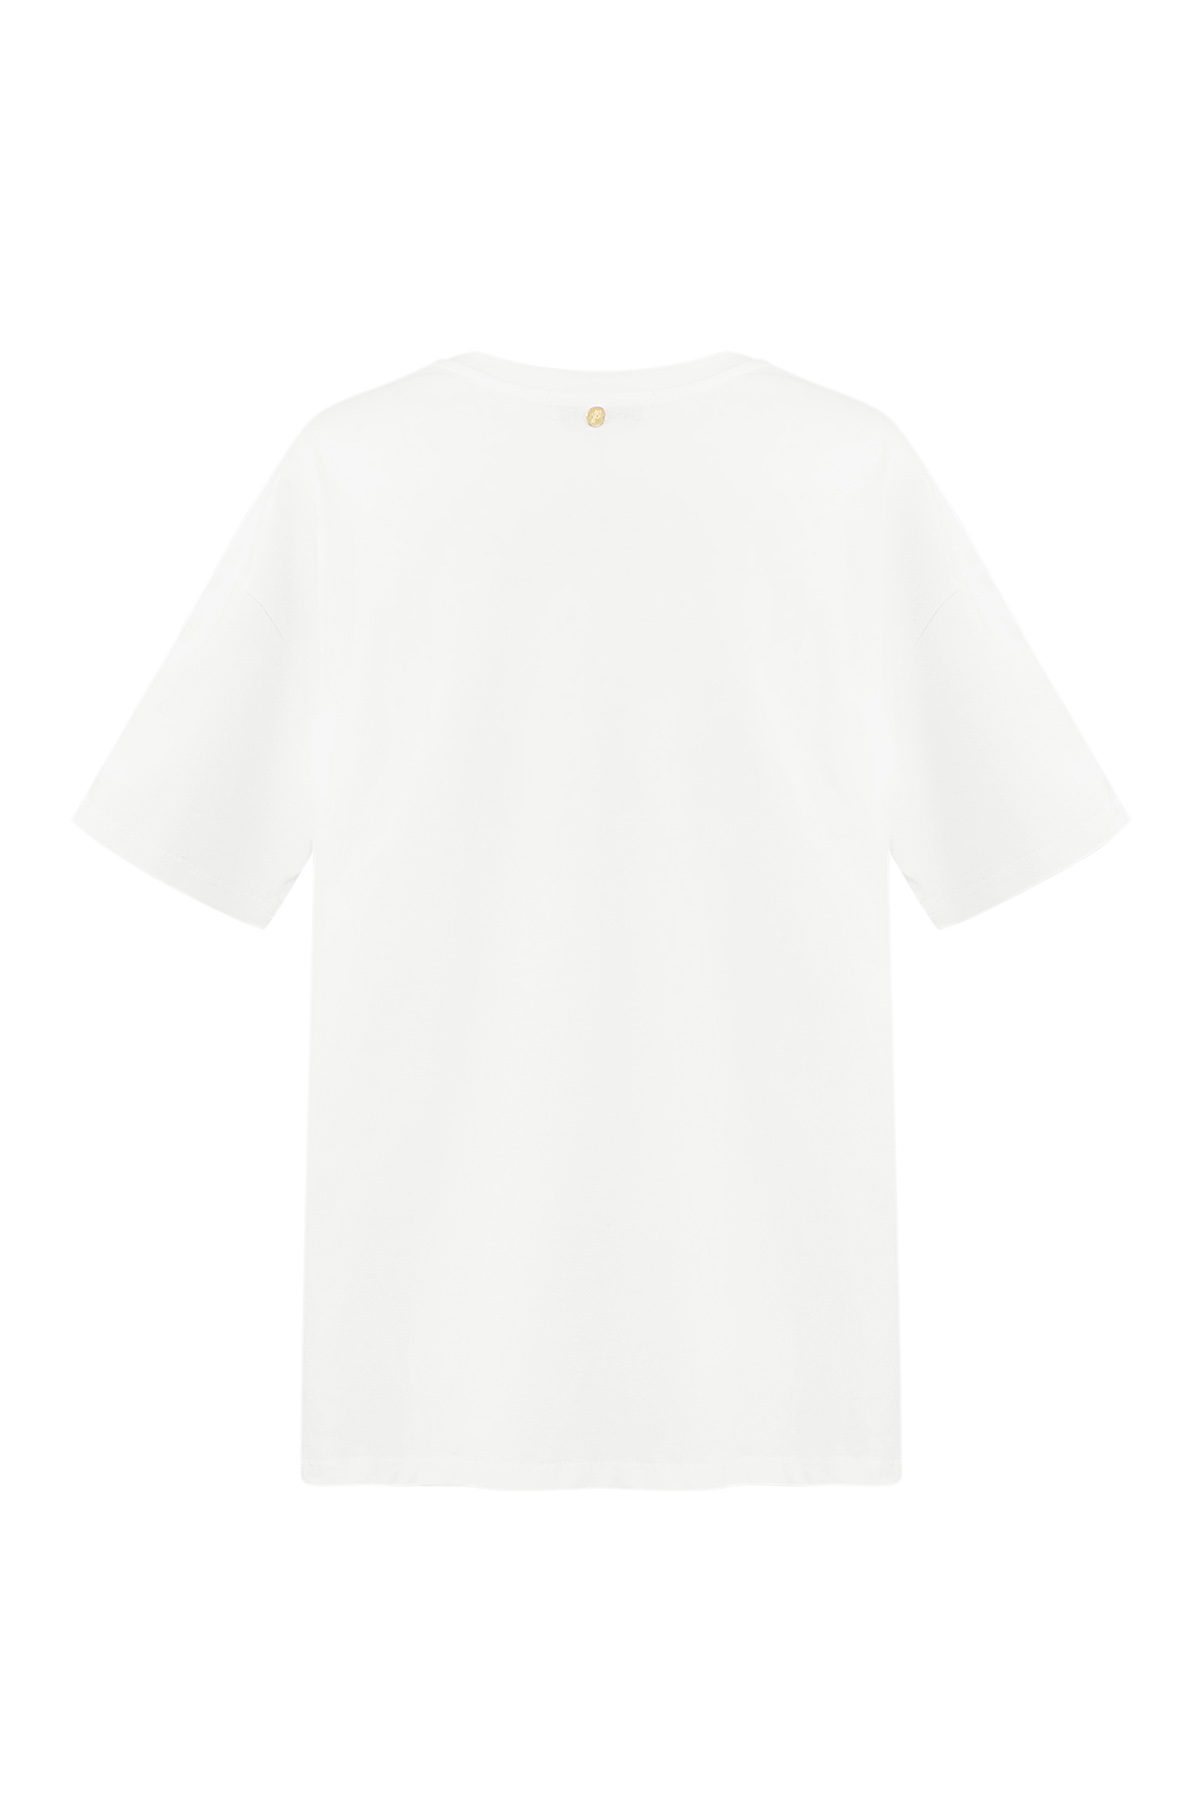 T-shirt mon amour - blanc Image8